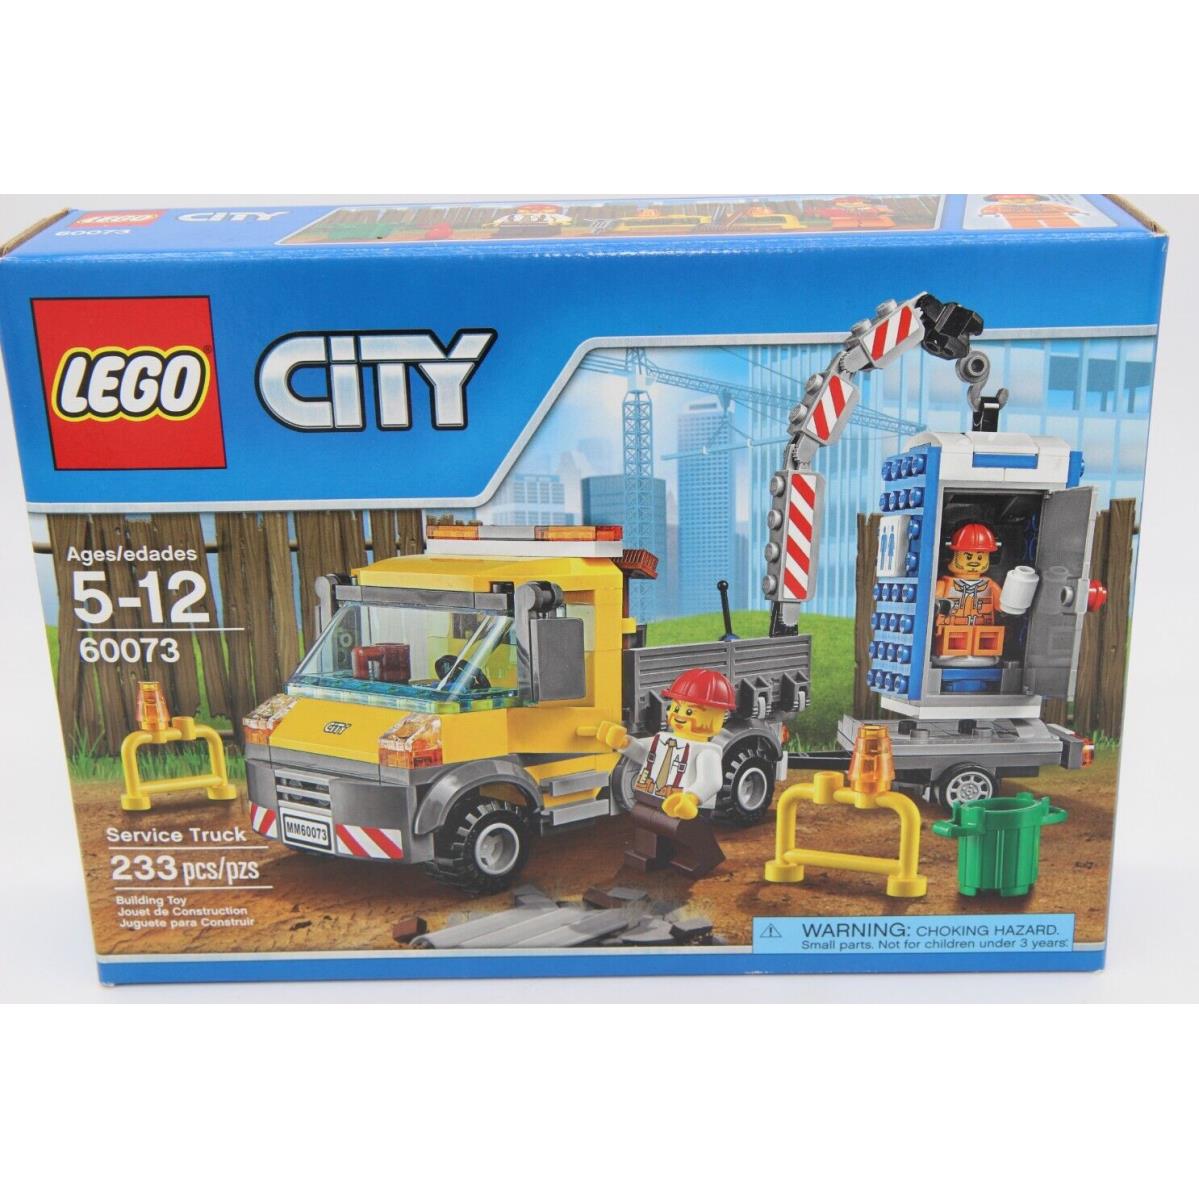 Lego City Service Truck Set 60073 Box